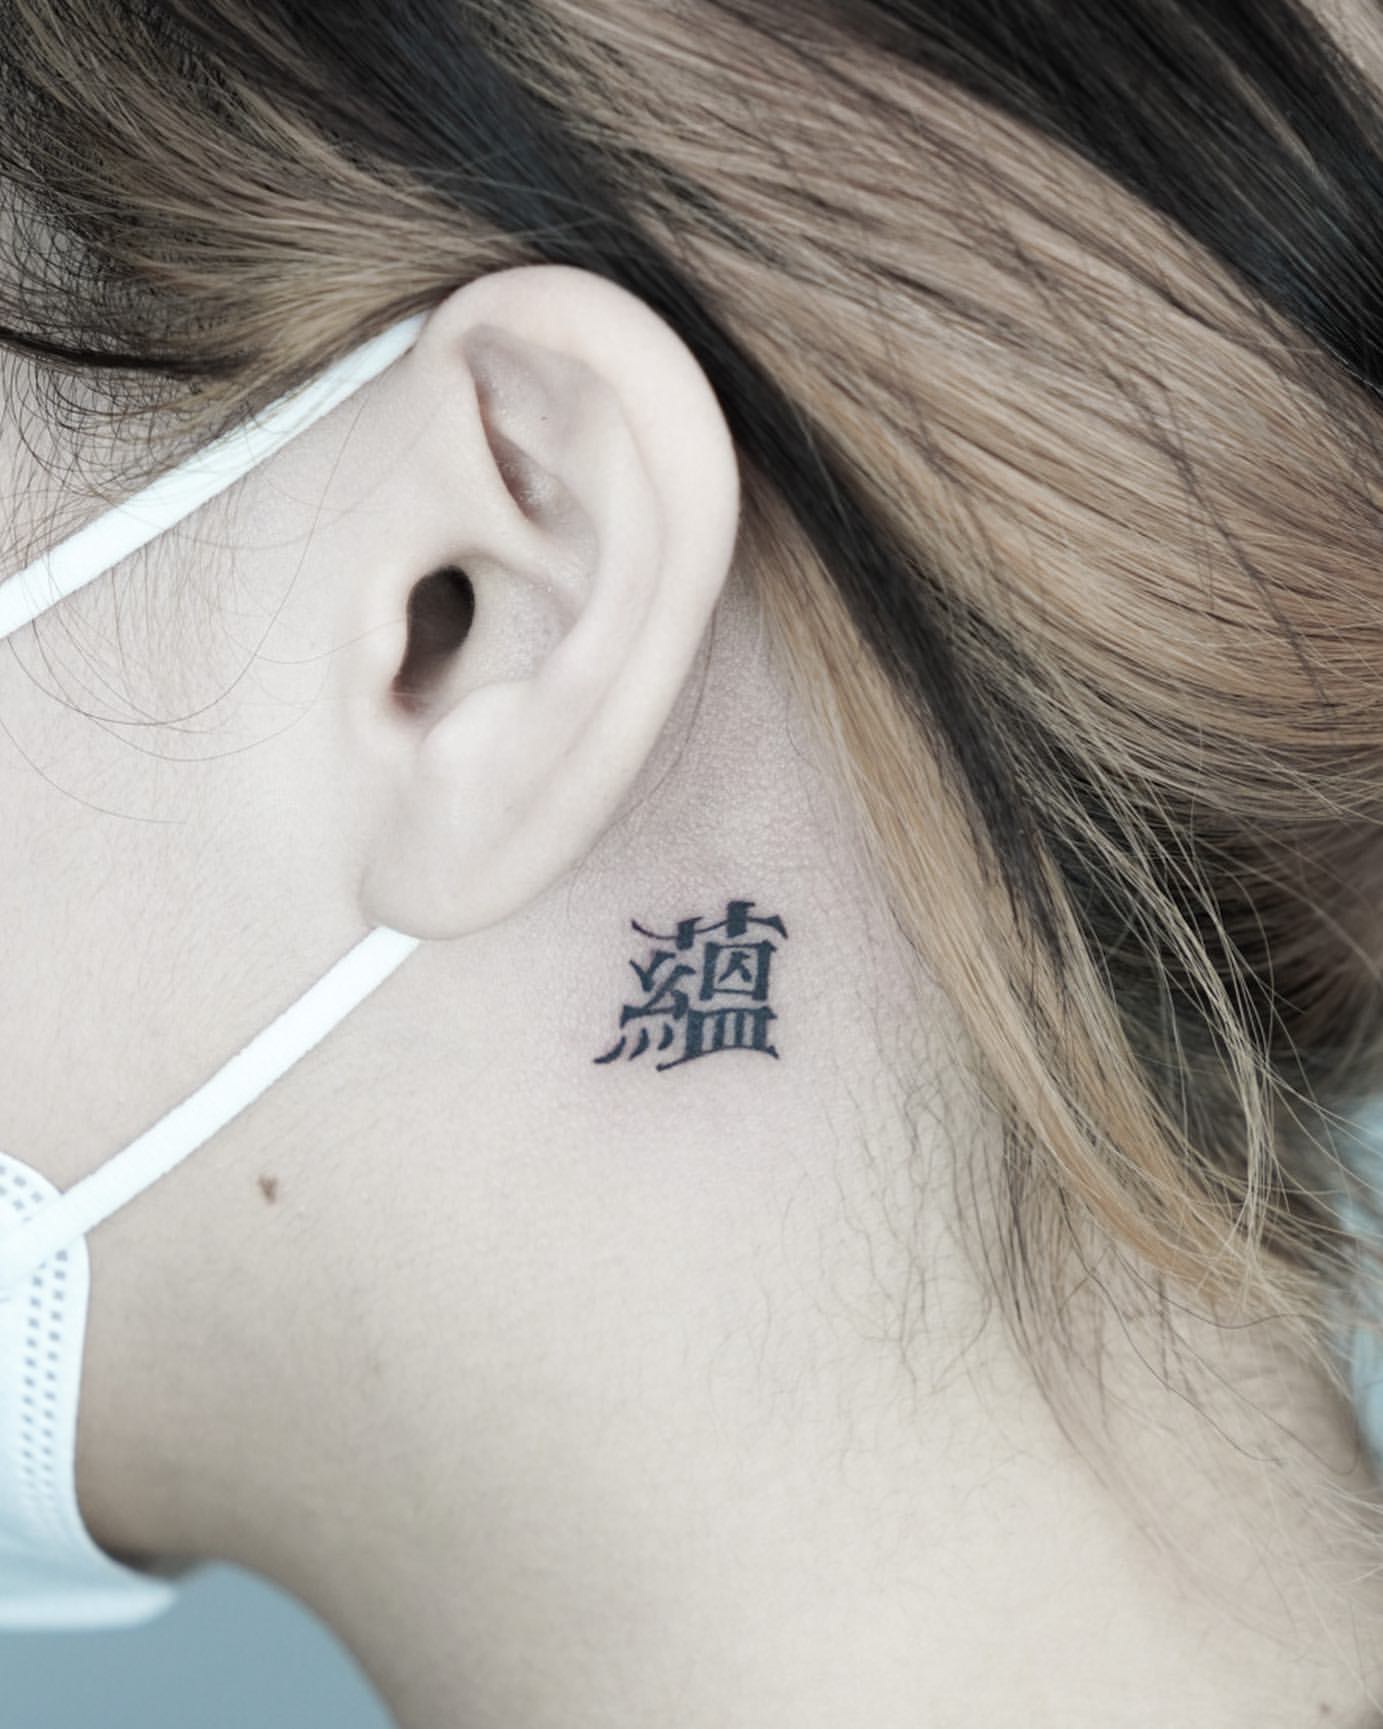 Behind the Ear Tattoos 30